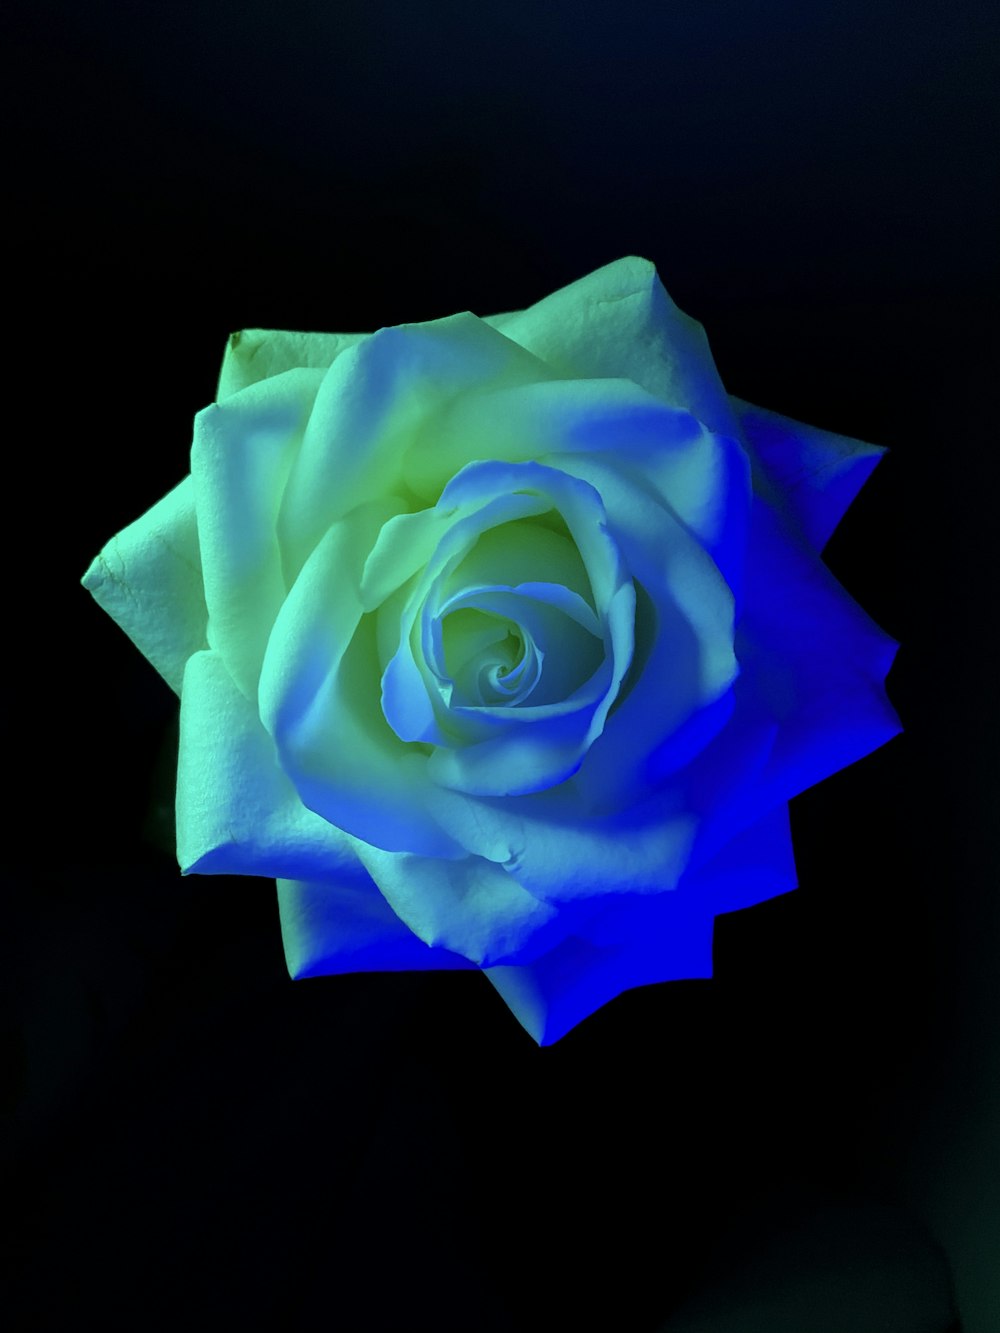 blue rose in black background photo – Free Plant Image on Unsplash